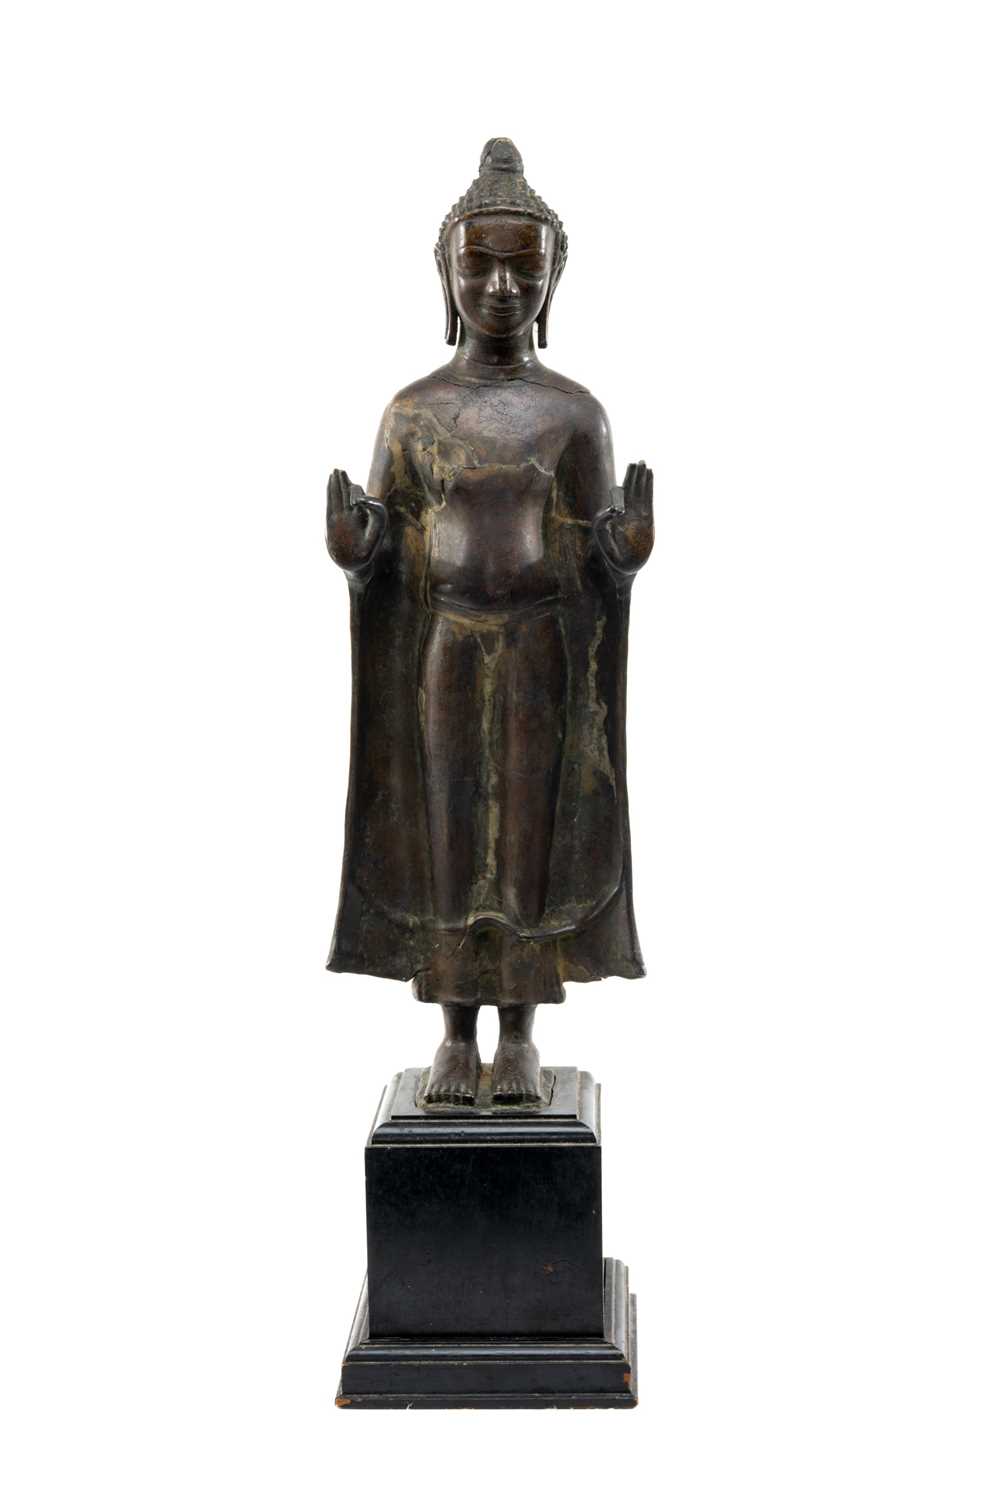 THAI COPPER ALLOY BUDDHA, Mon Dvaravati Style c. 8th-10th Century, cast in frontal position of